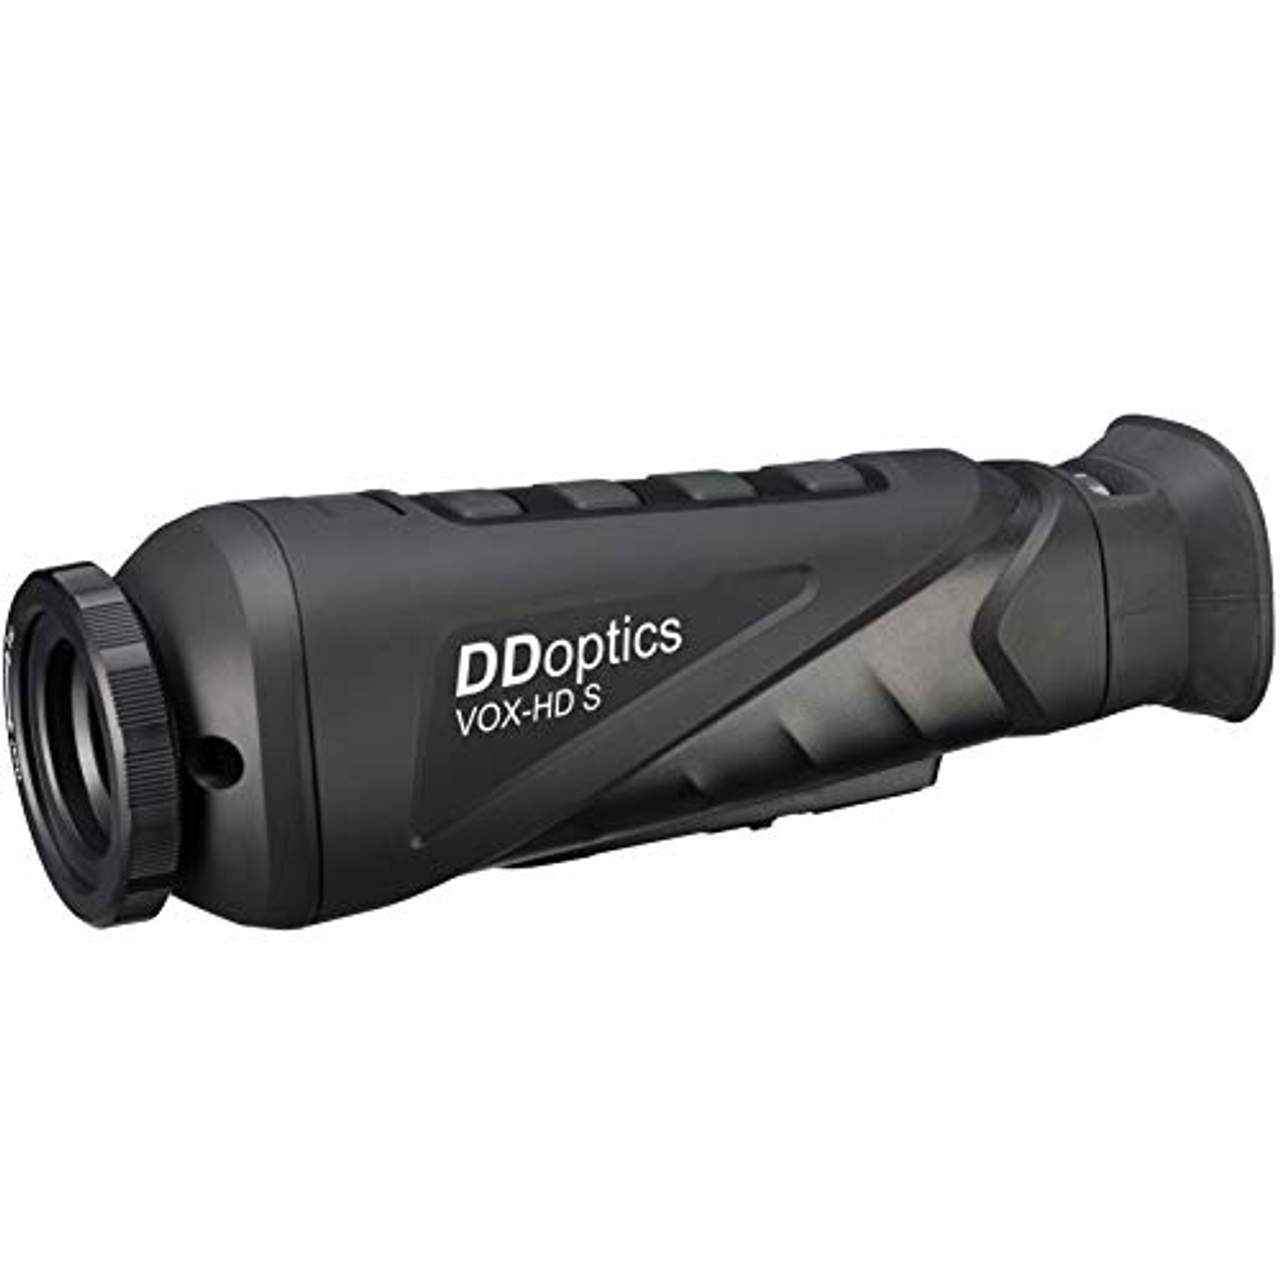 Ddoptics Wärmebildkamera Nachtfalke VOX-HD S 2,5x